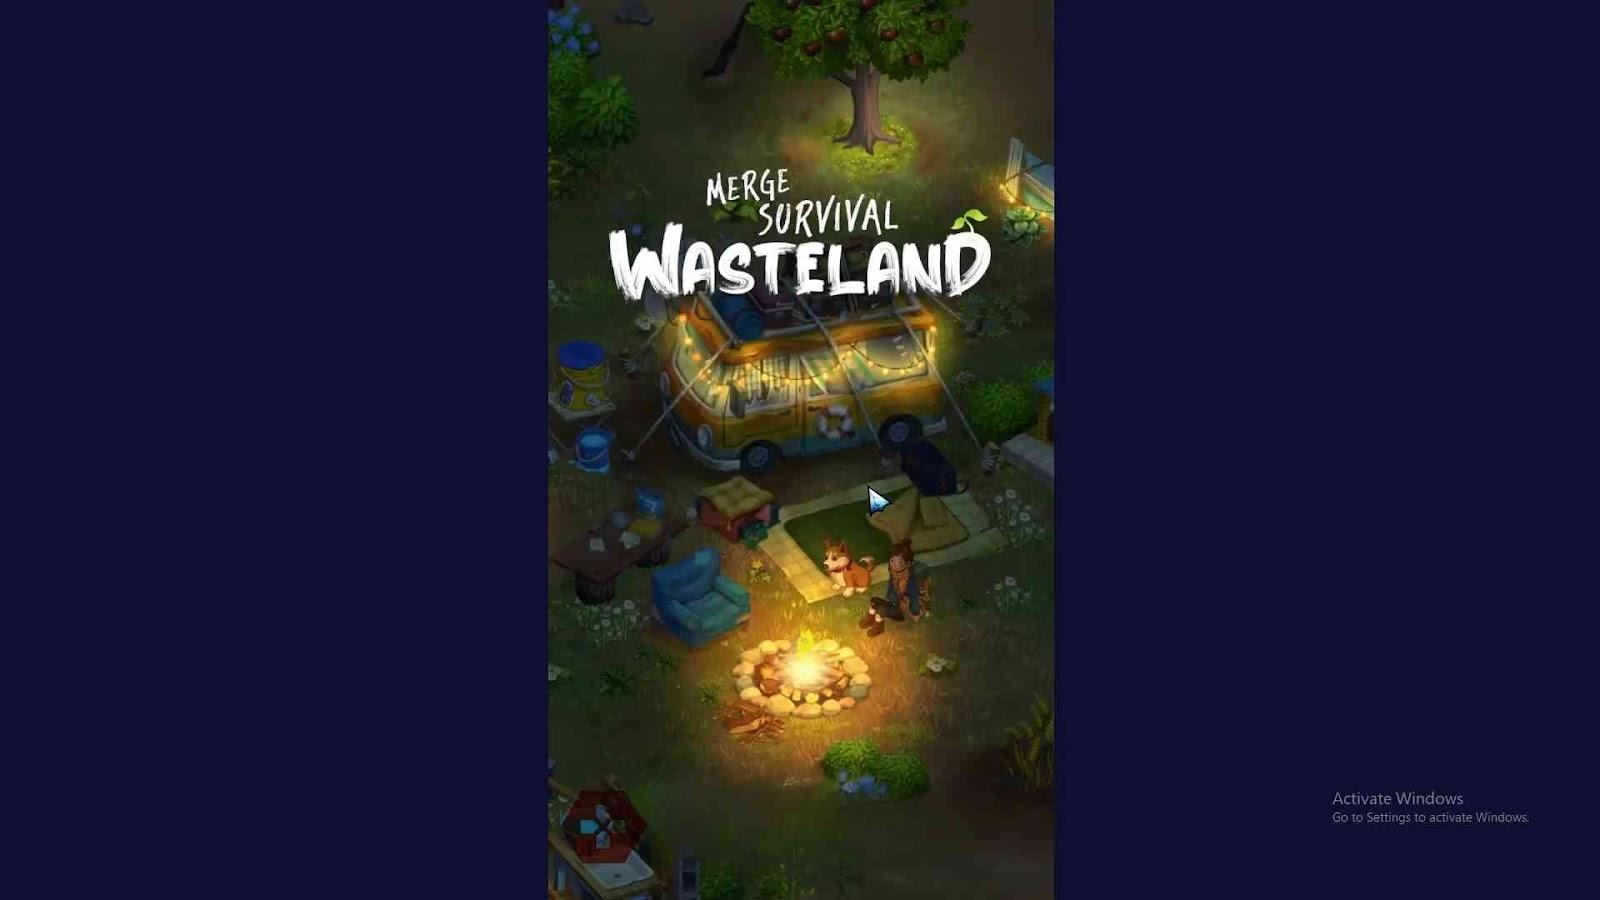 Merge Survival: Wasteland